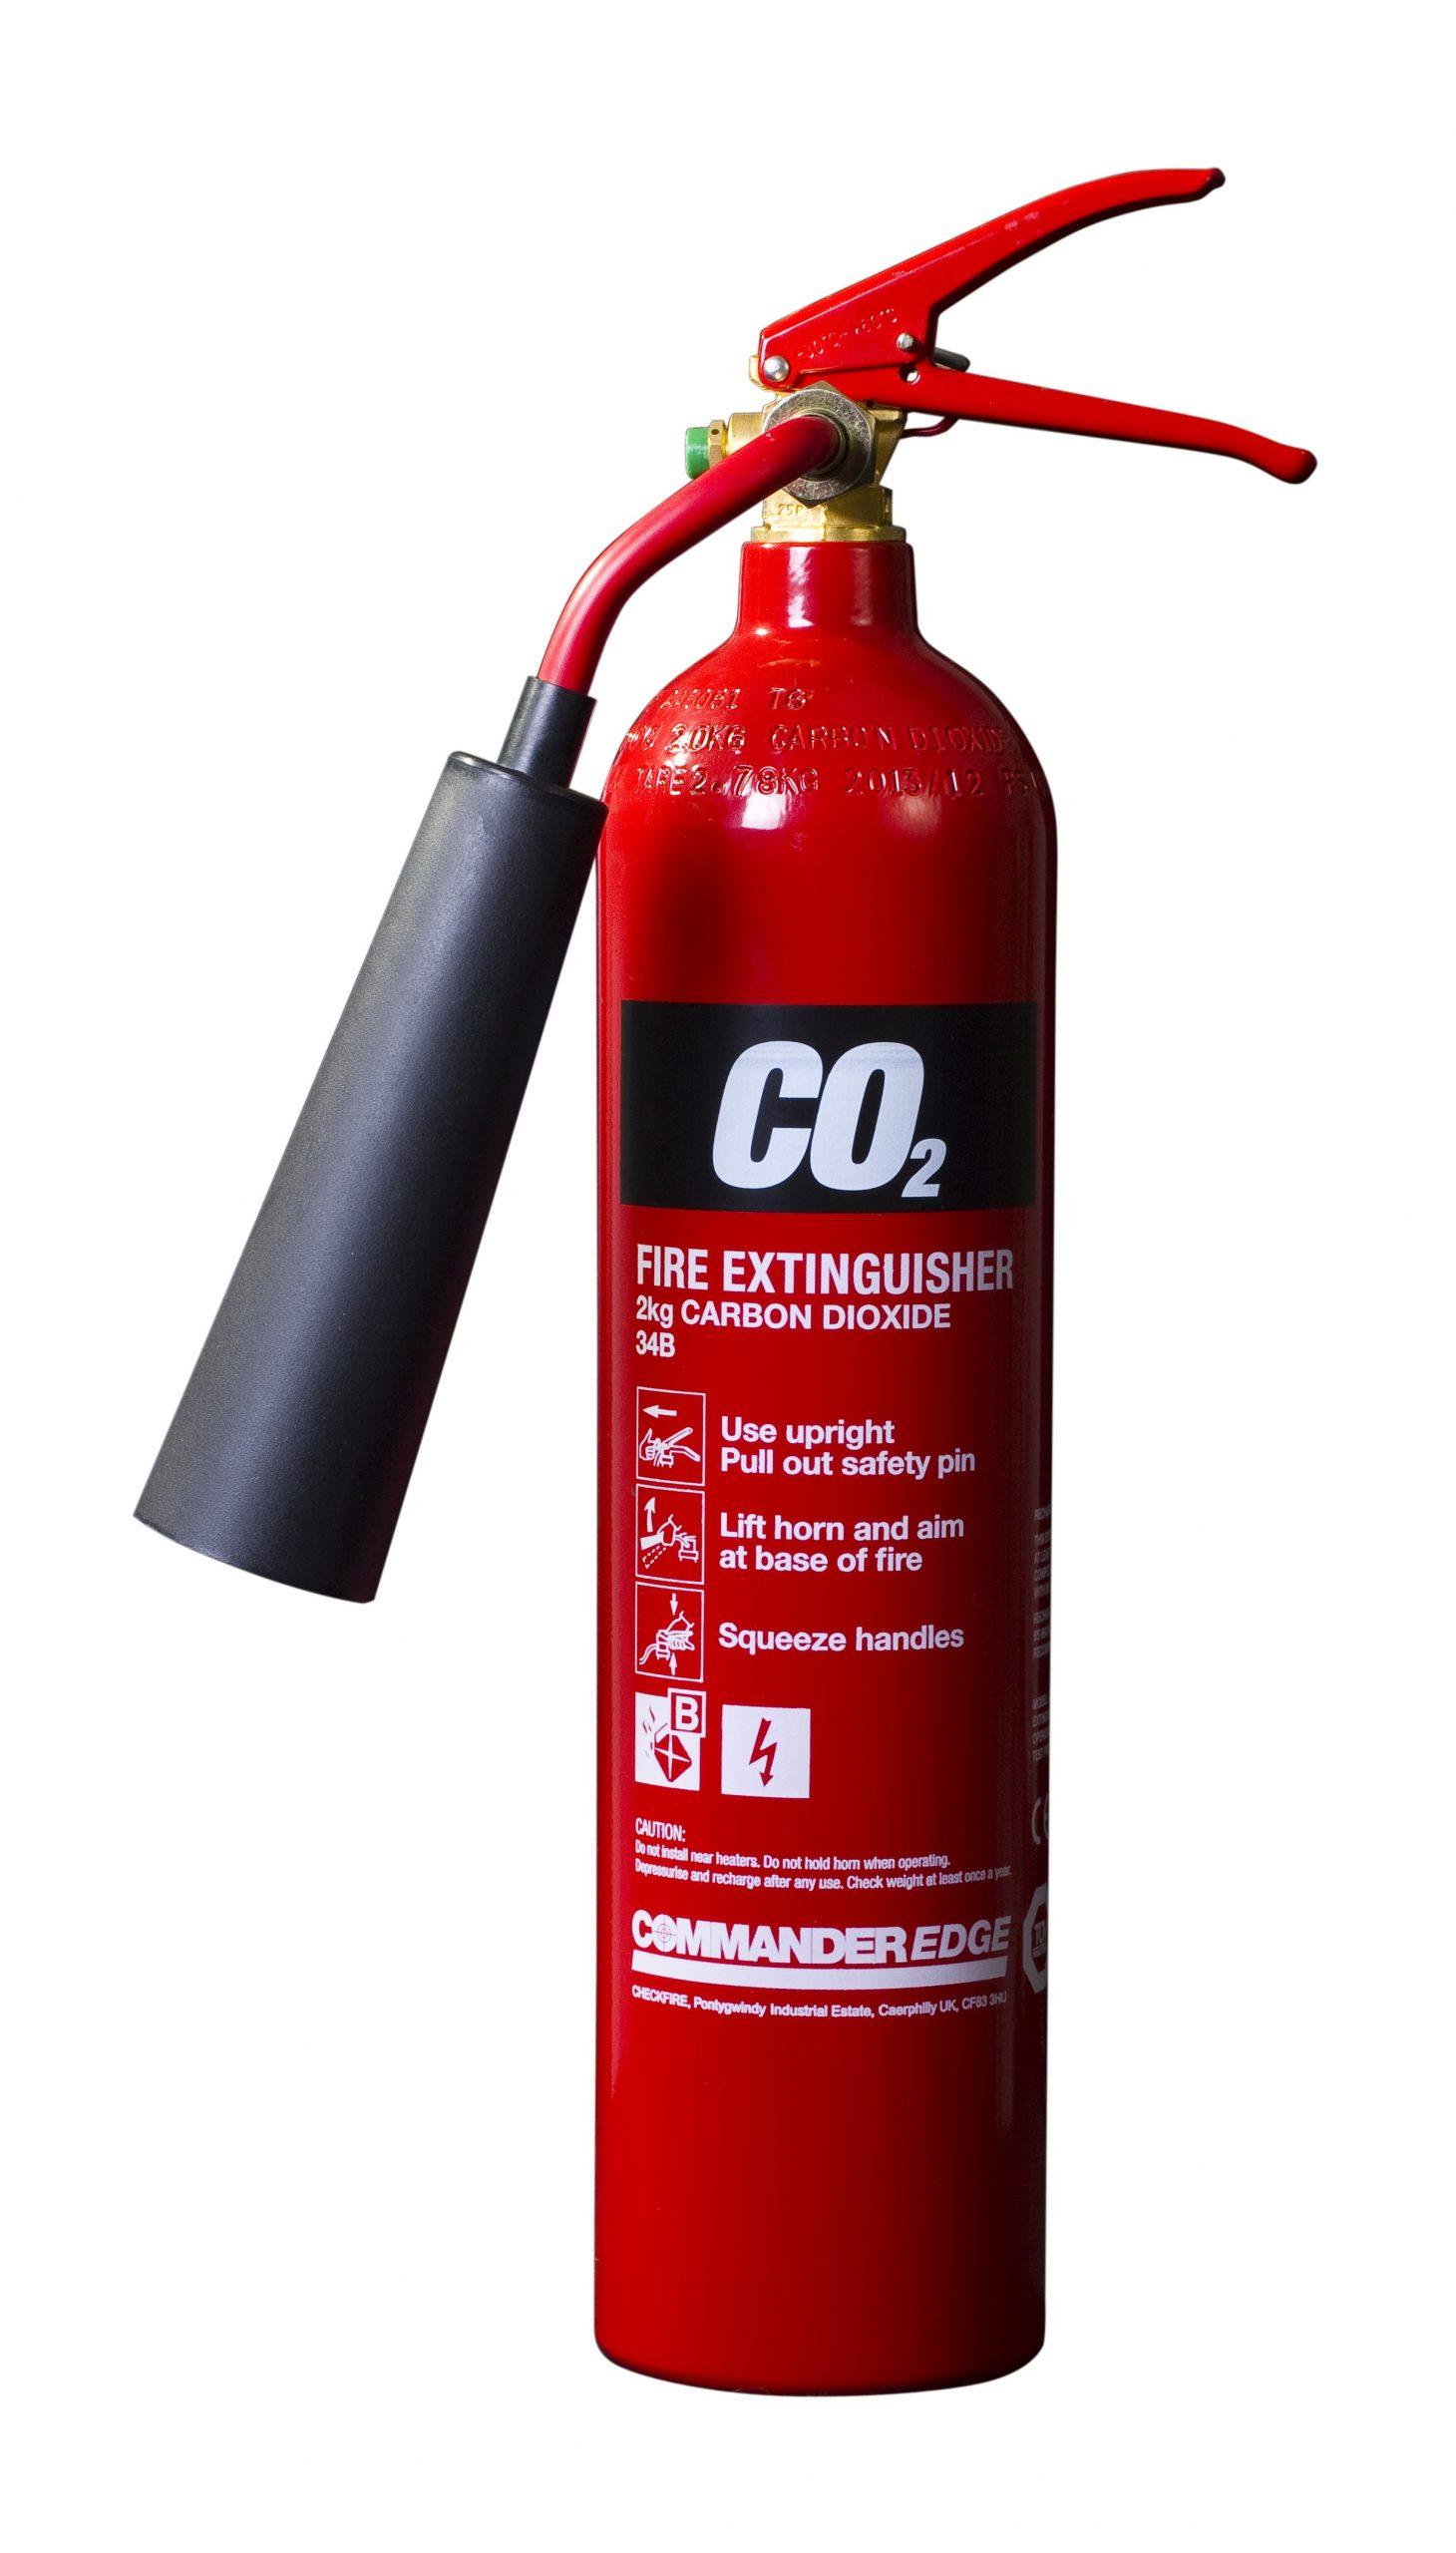 Product 2 KG CO2 Fire Extinguisher - ElectroMed image